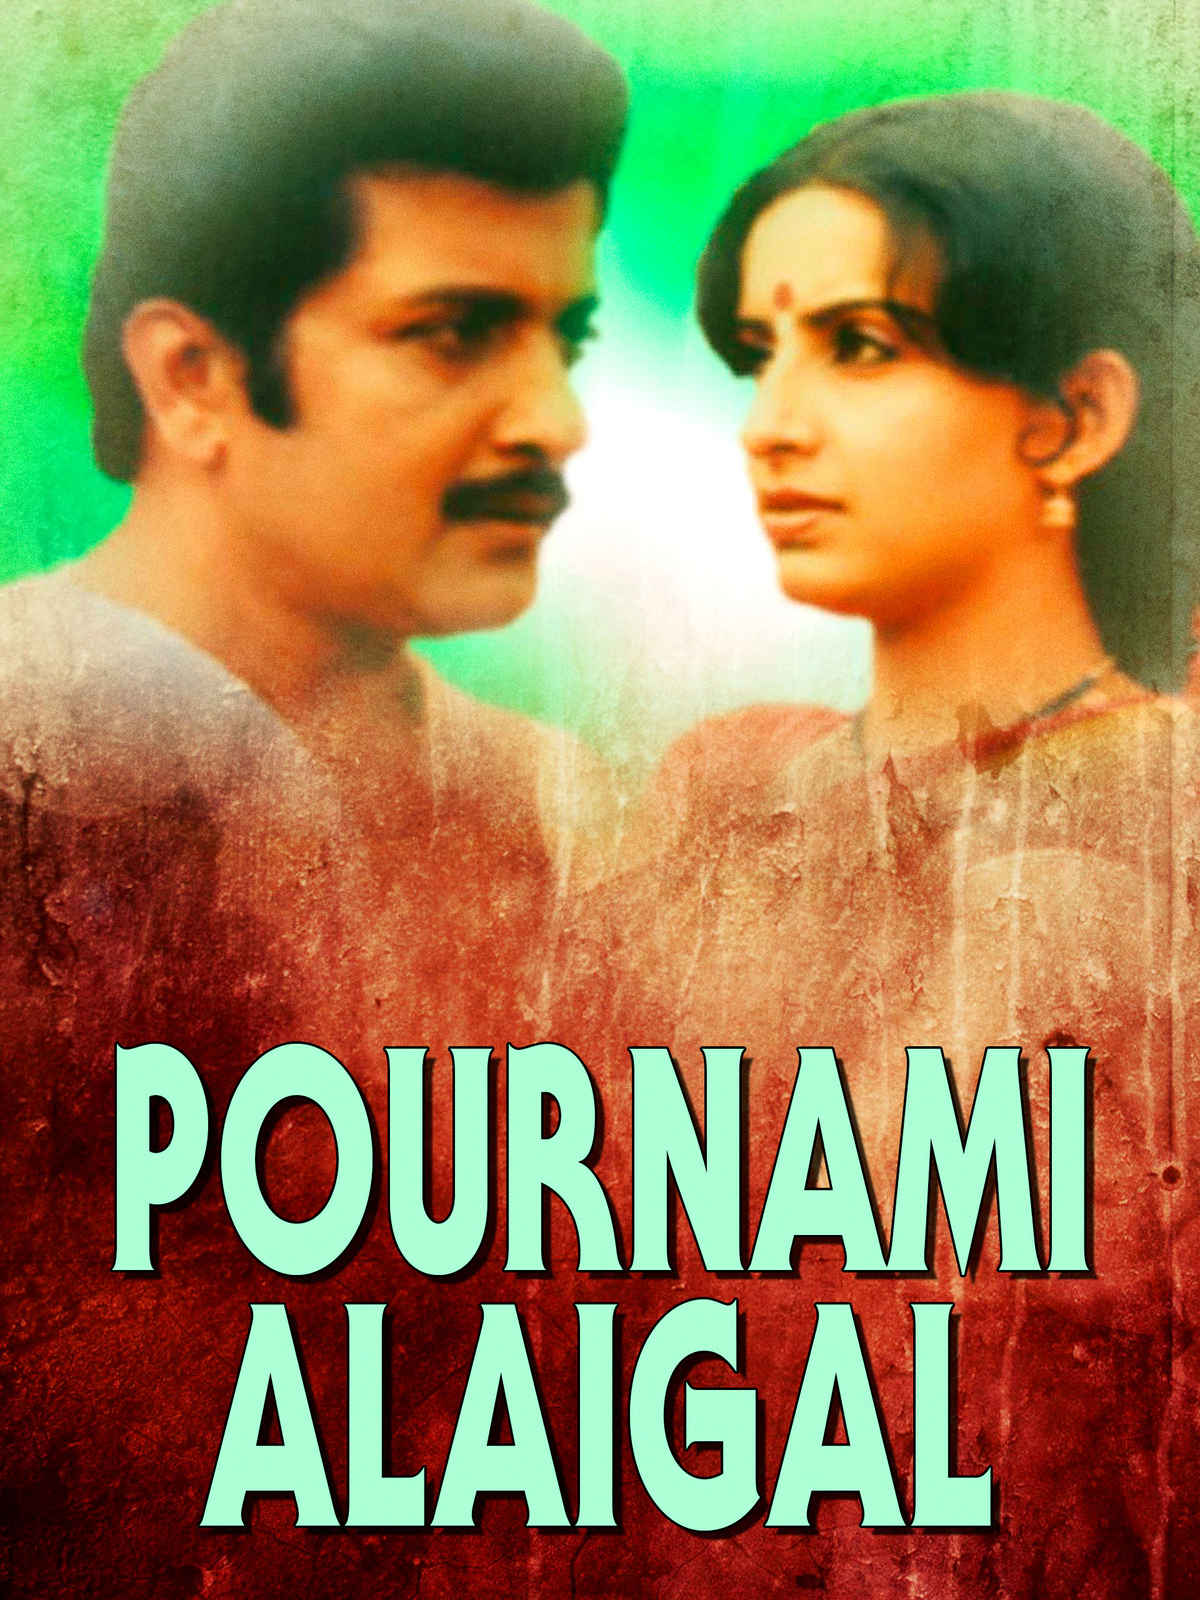 watch pournami tamil dubbed movie online